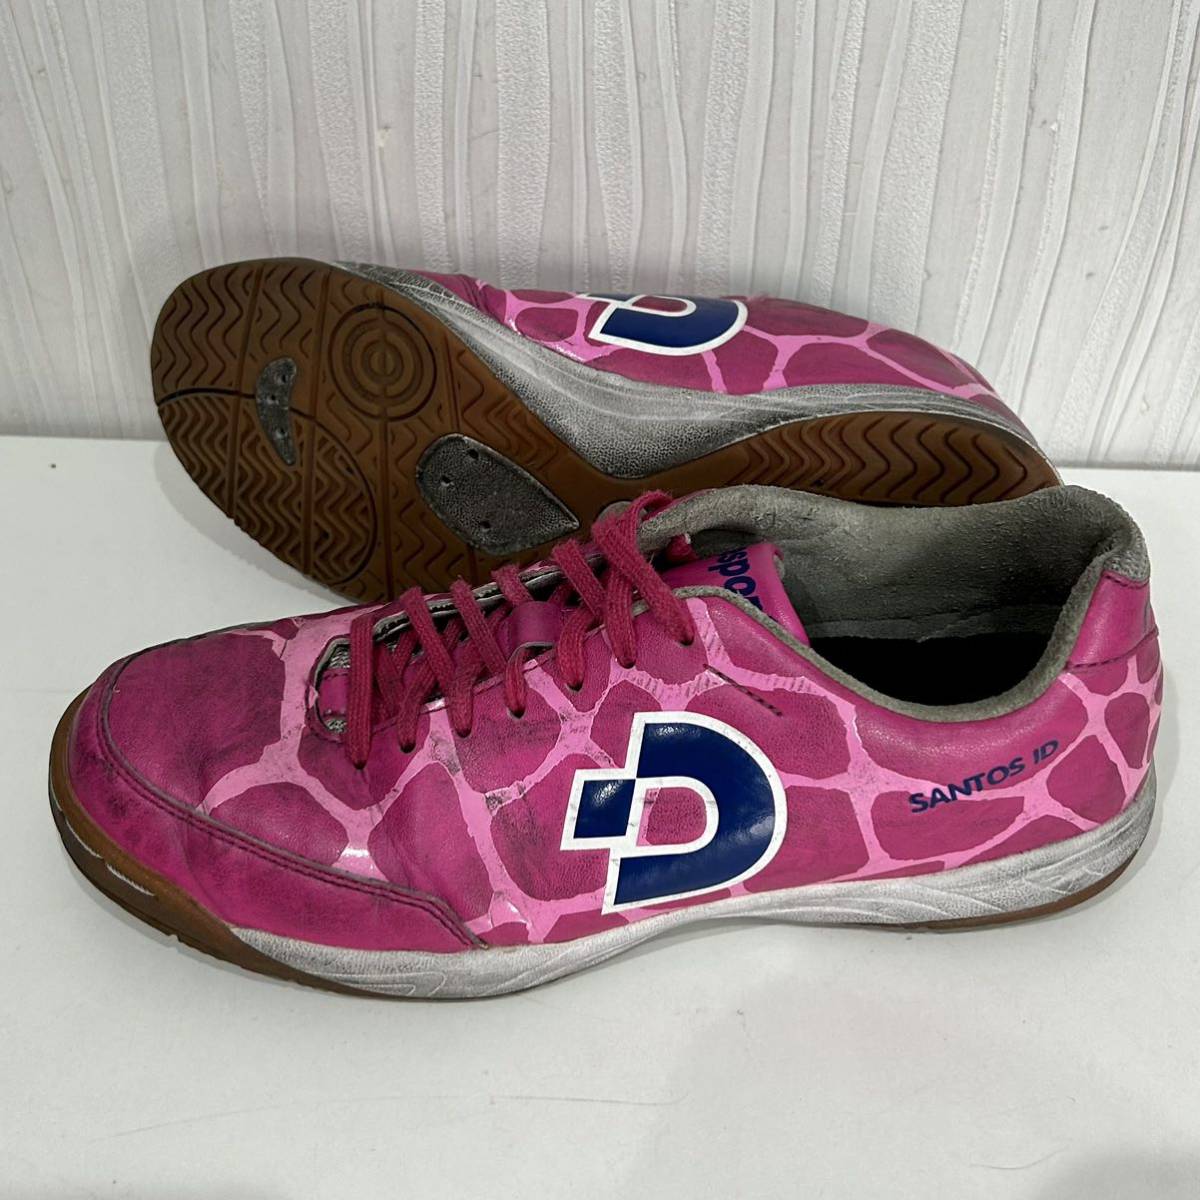 [25.0cm] prompt decision!te spo ruchiDESPORTE sun tosID( pink ) secondhand goods futsal India a shoes artificial leather microfibre 